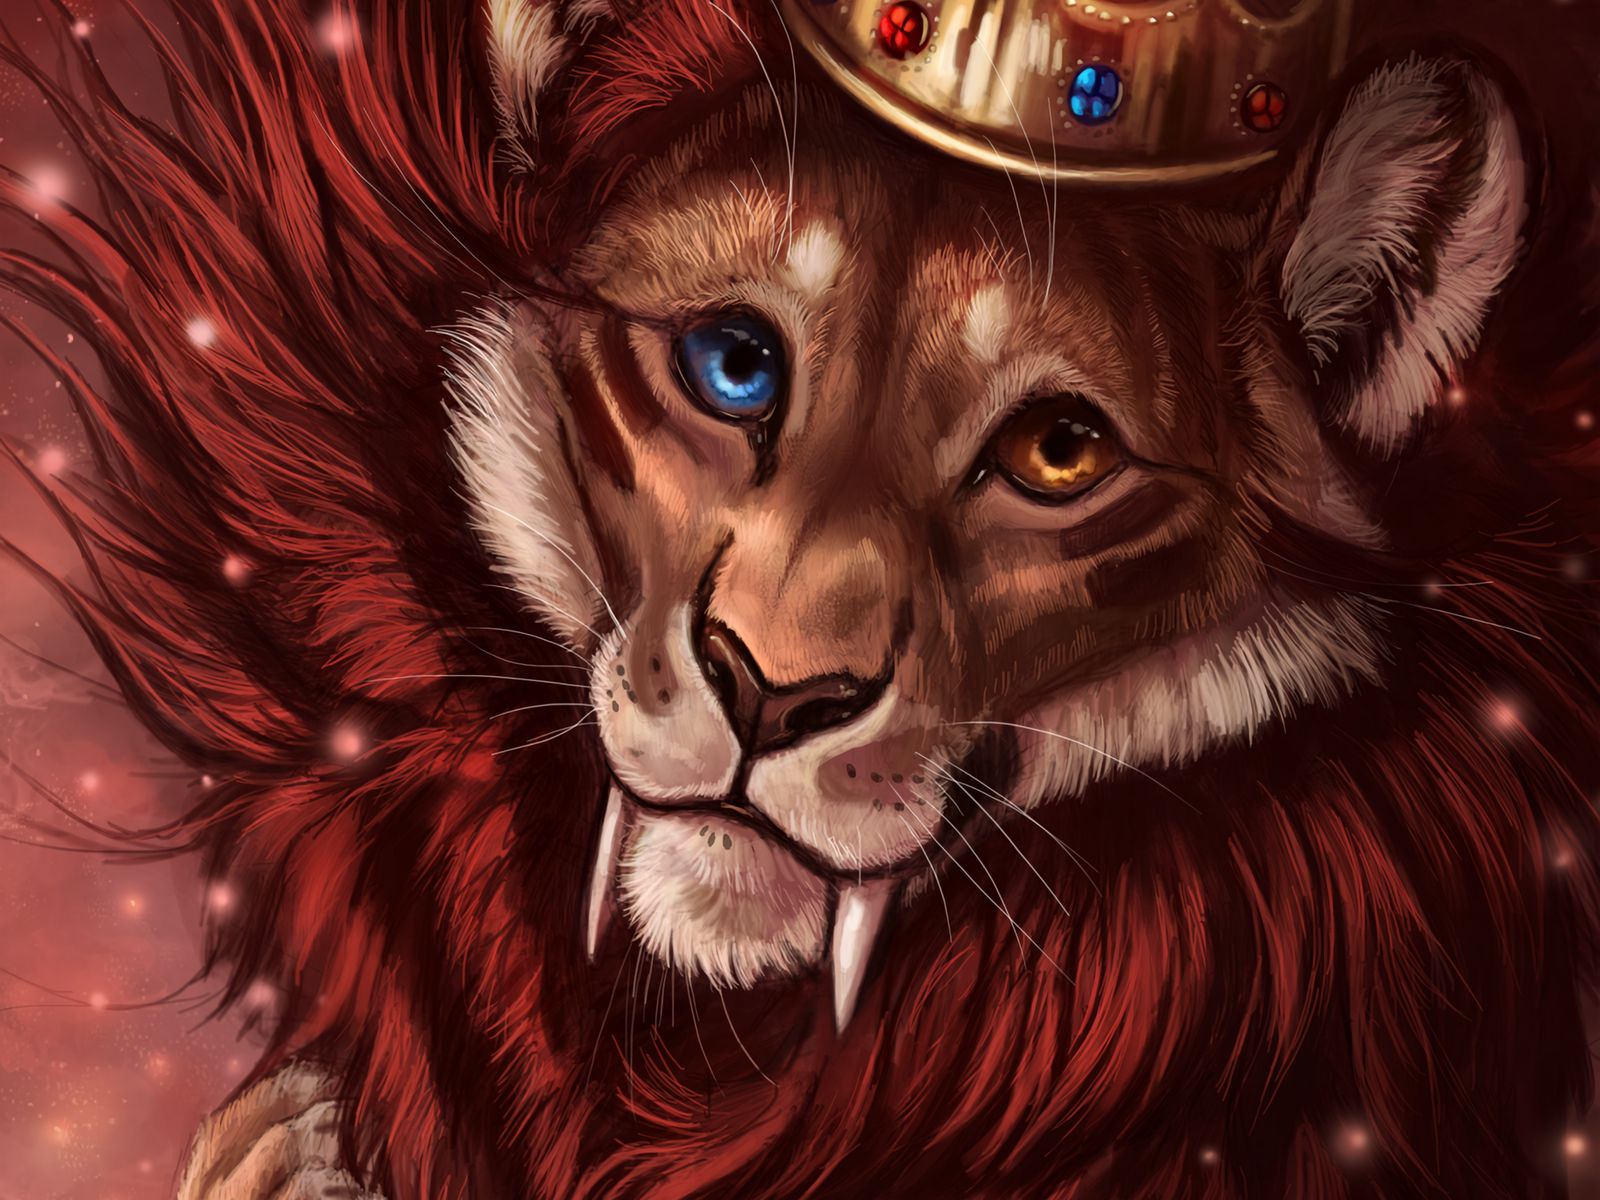 Download wallpaper 1600x1200 lion, crown, art, king of beasts, king  standard 4:3 hd background